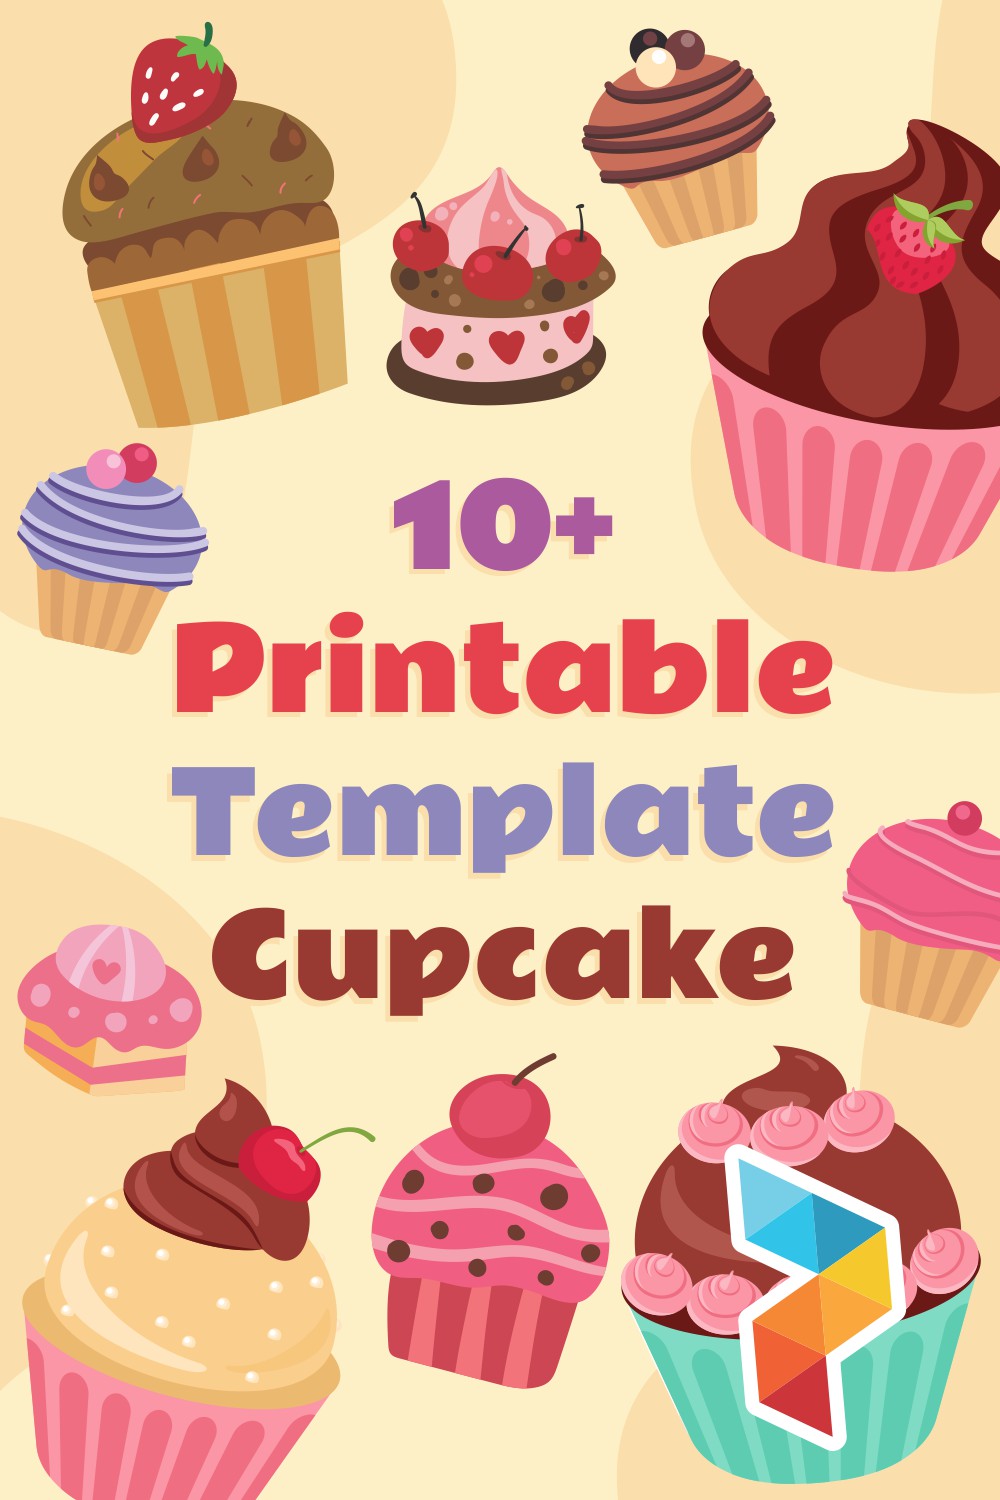 Printable Template Cupcake